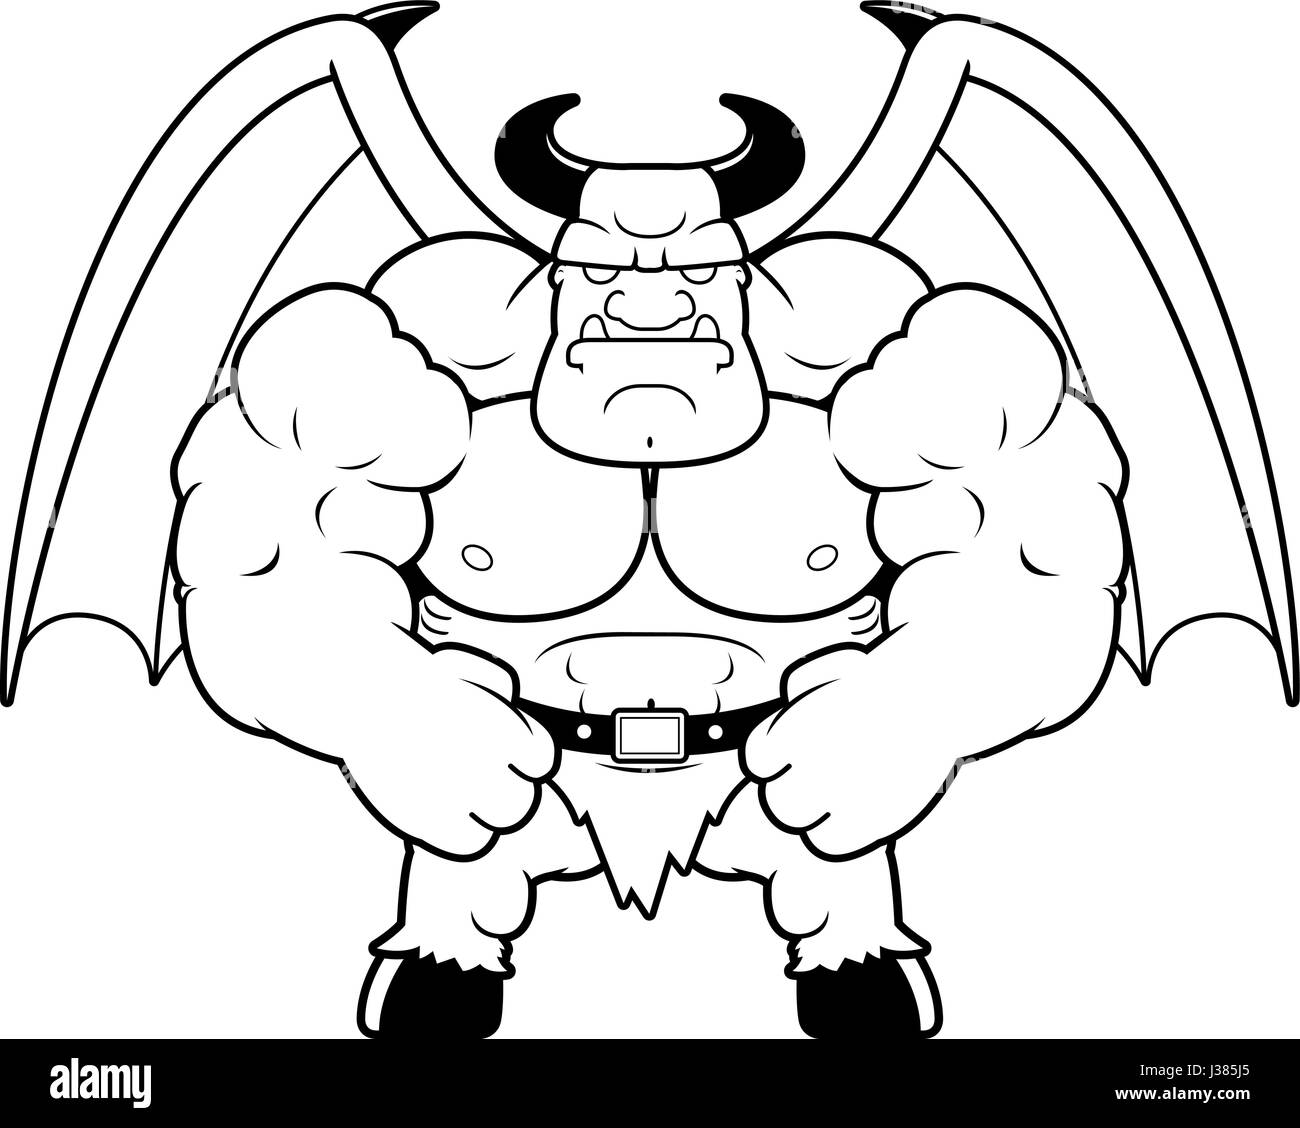 A cartoon illustration of a muscular demon flexing. Stock Vector